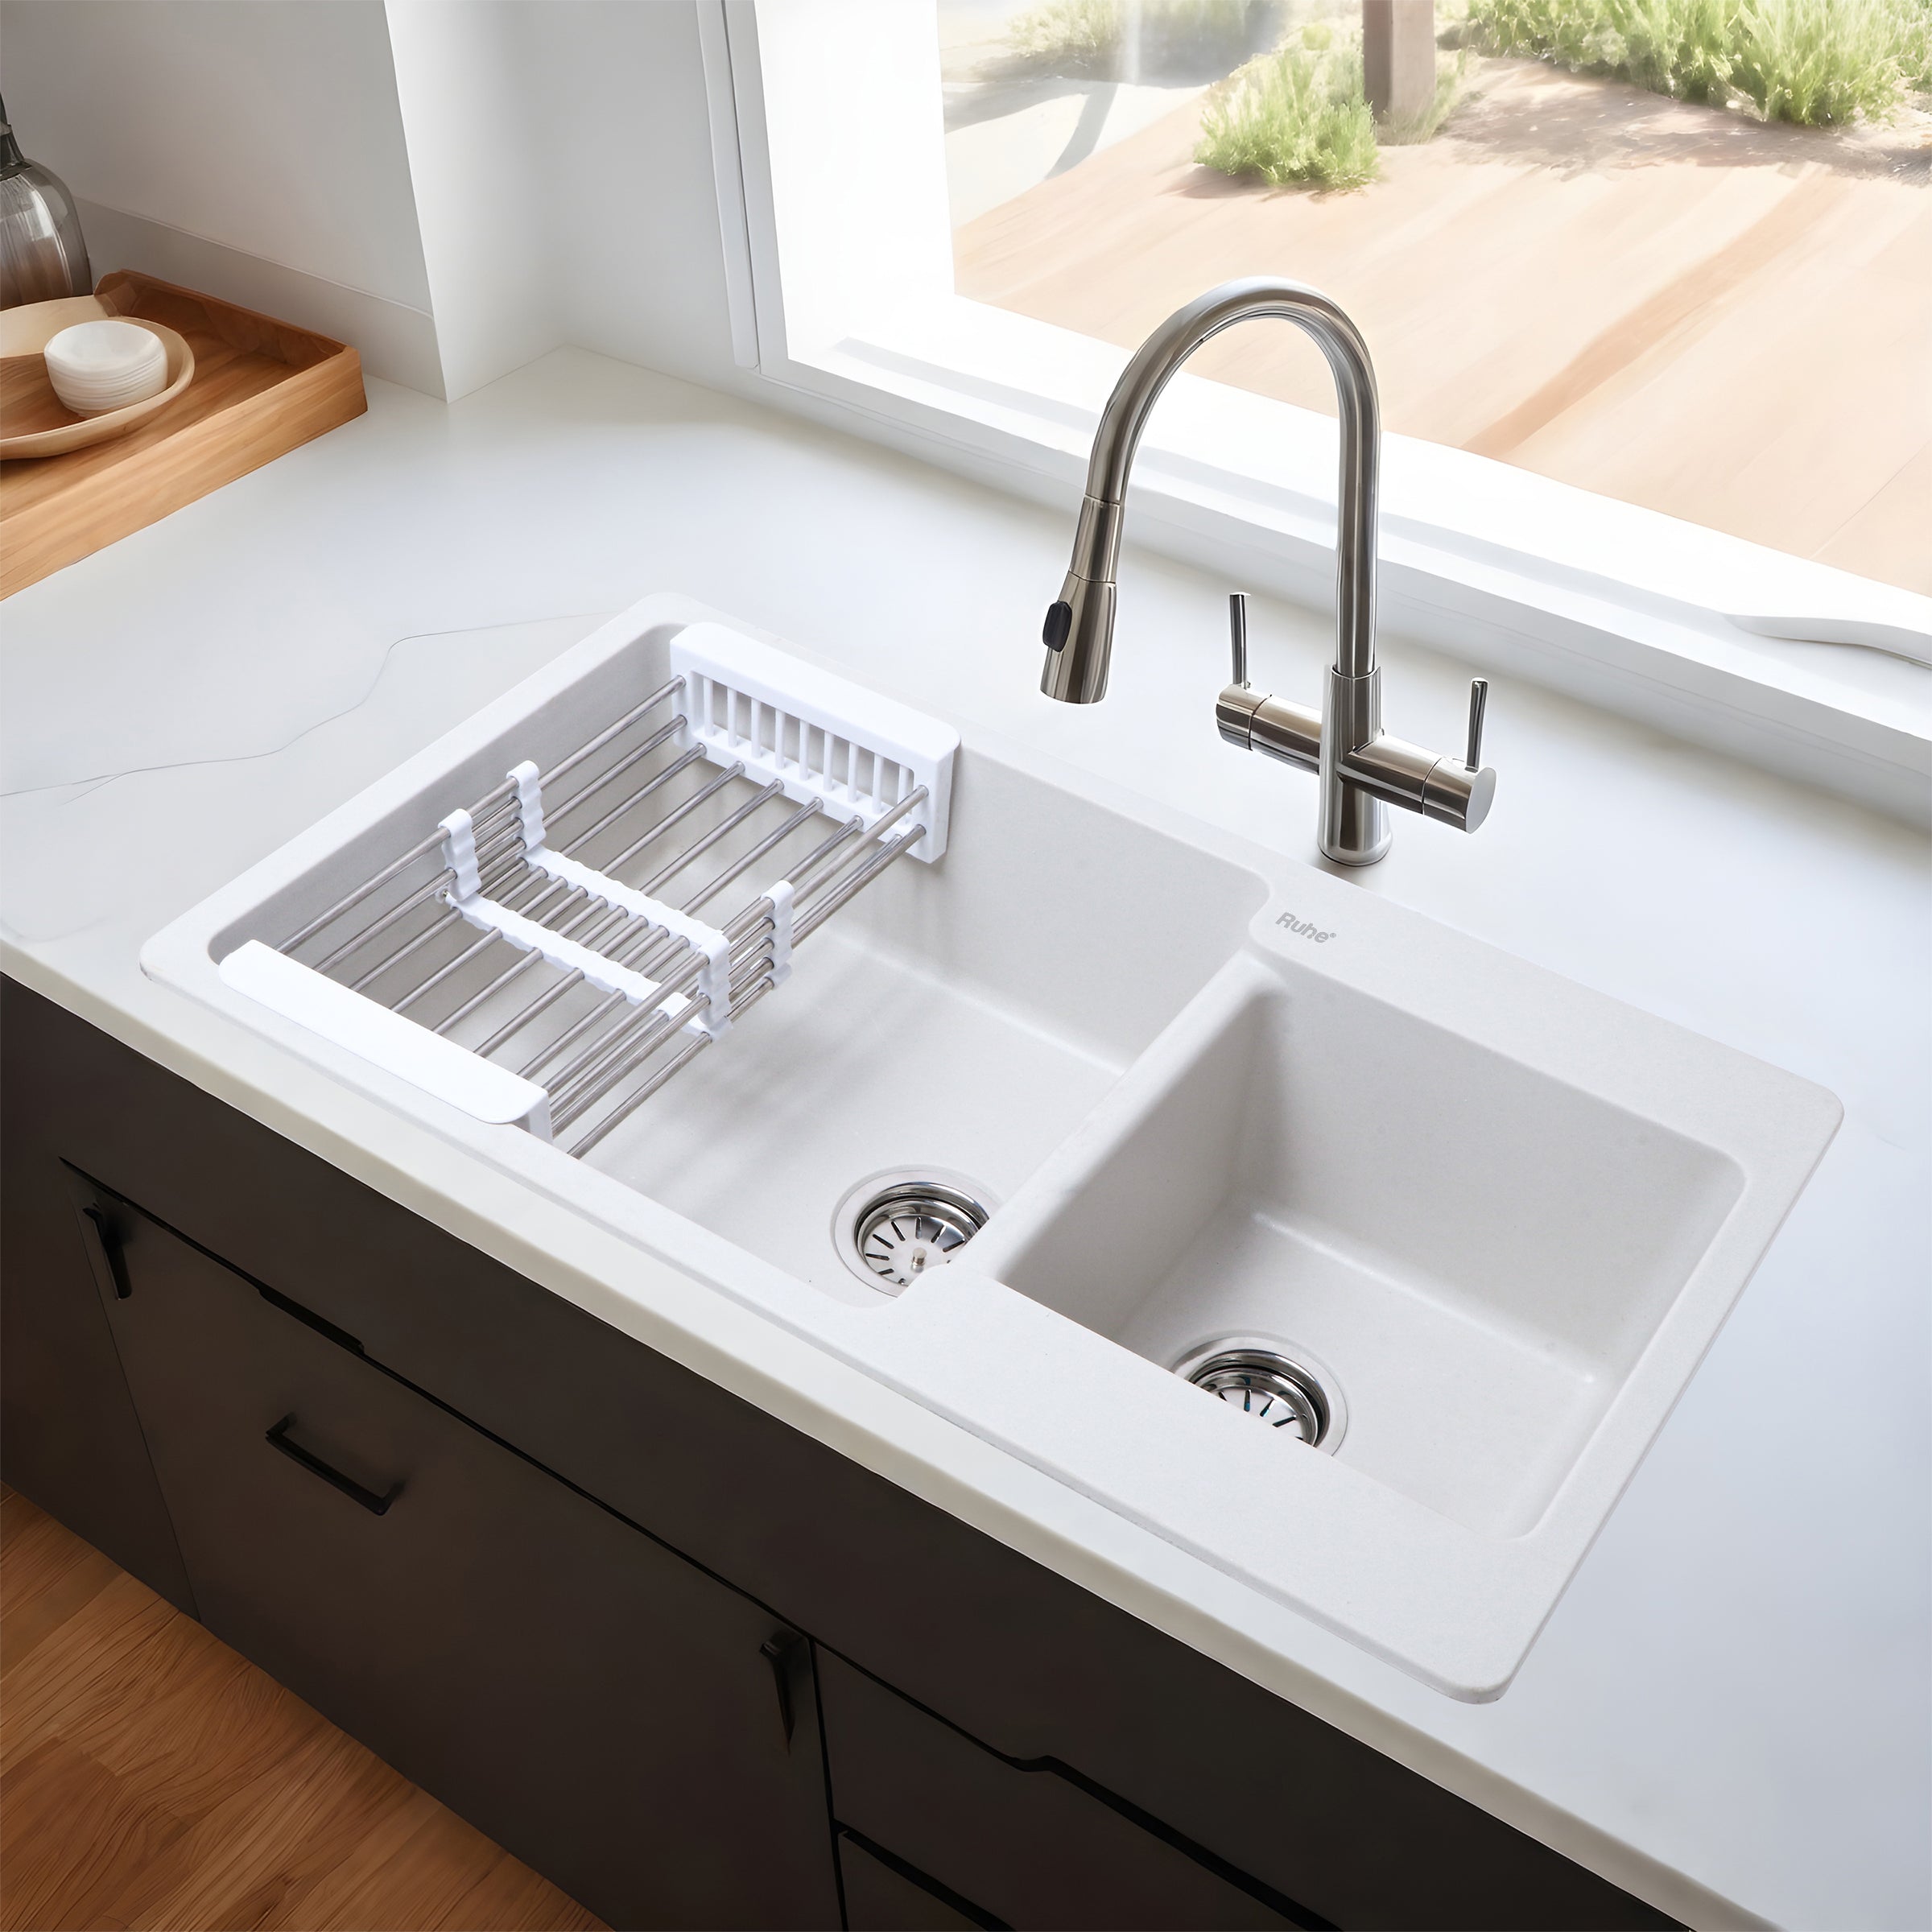 Quartz Black Single Bowl Kitchen Sink (31 x 19 x 9 inches) installed